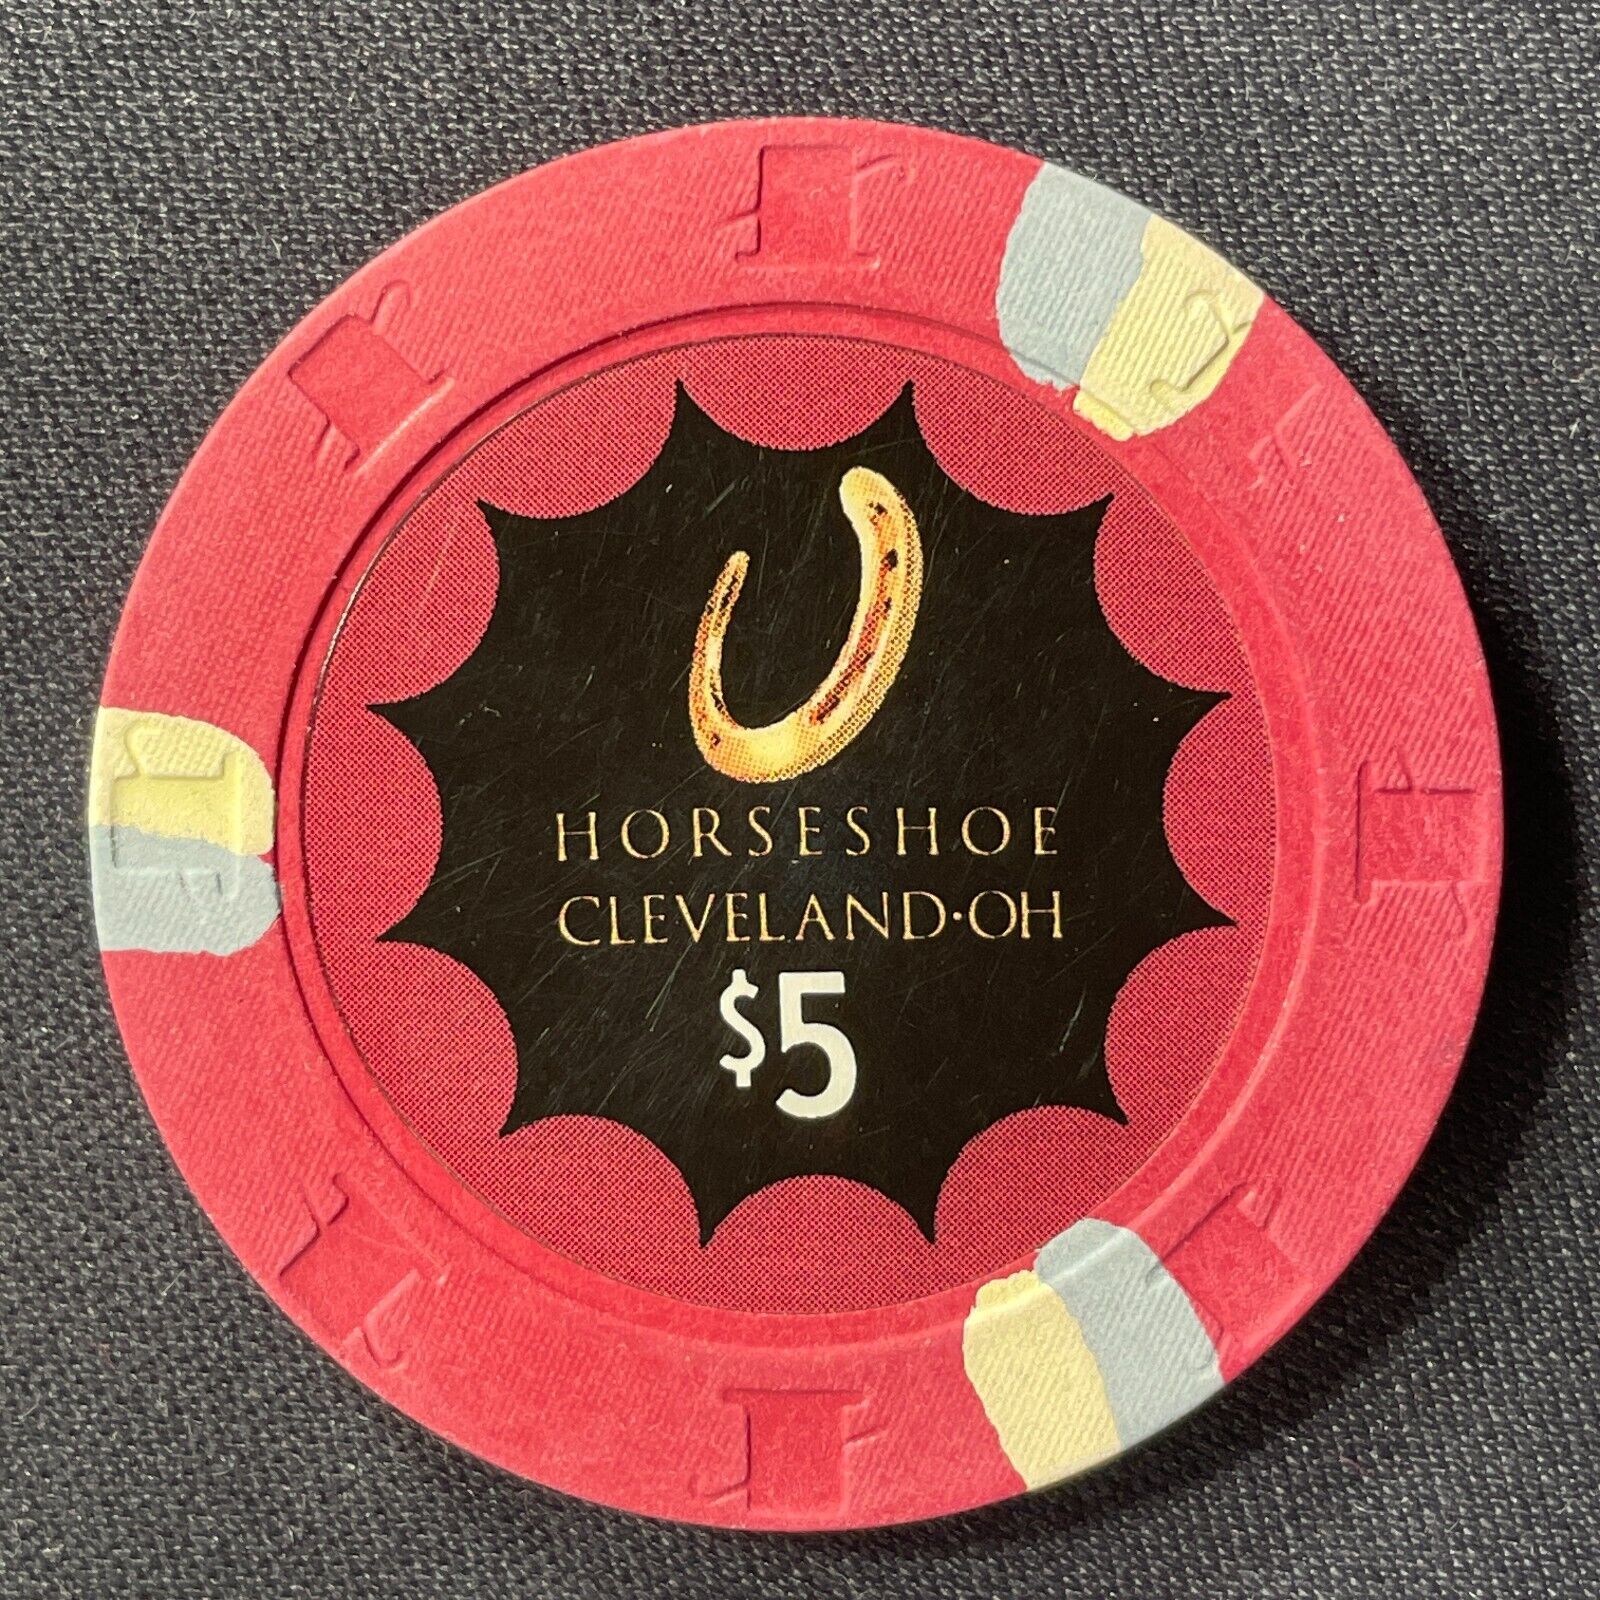 Horseshoe Cleveland Ohio $5 casino chip obsolete gaming token poker chip M5